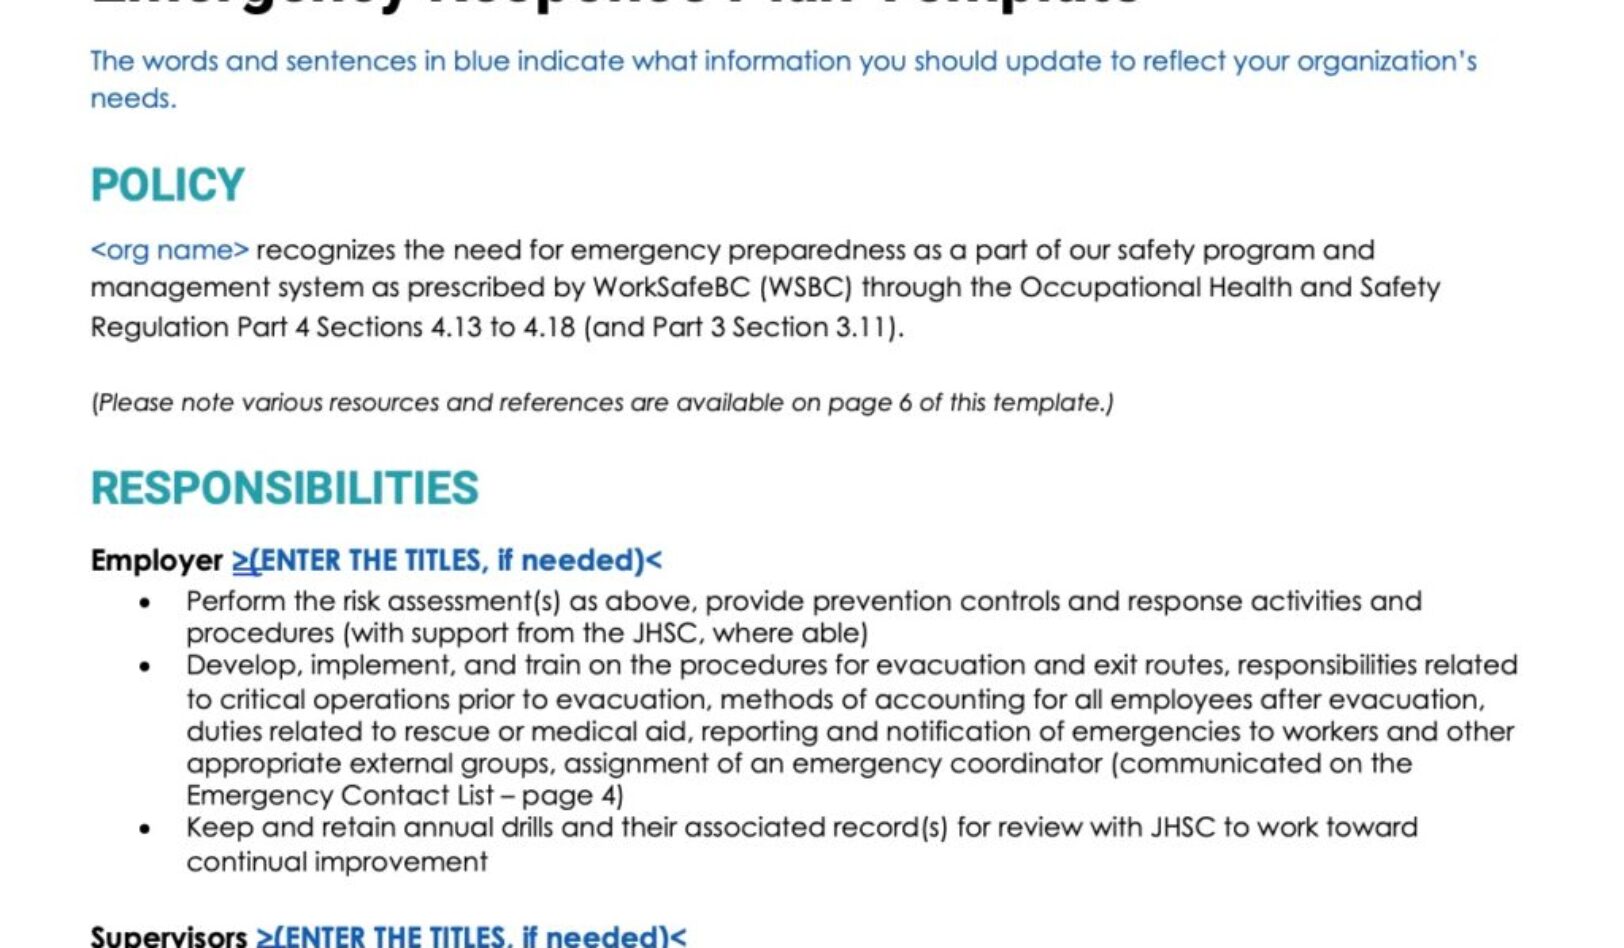 Emergency Response Plan Template